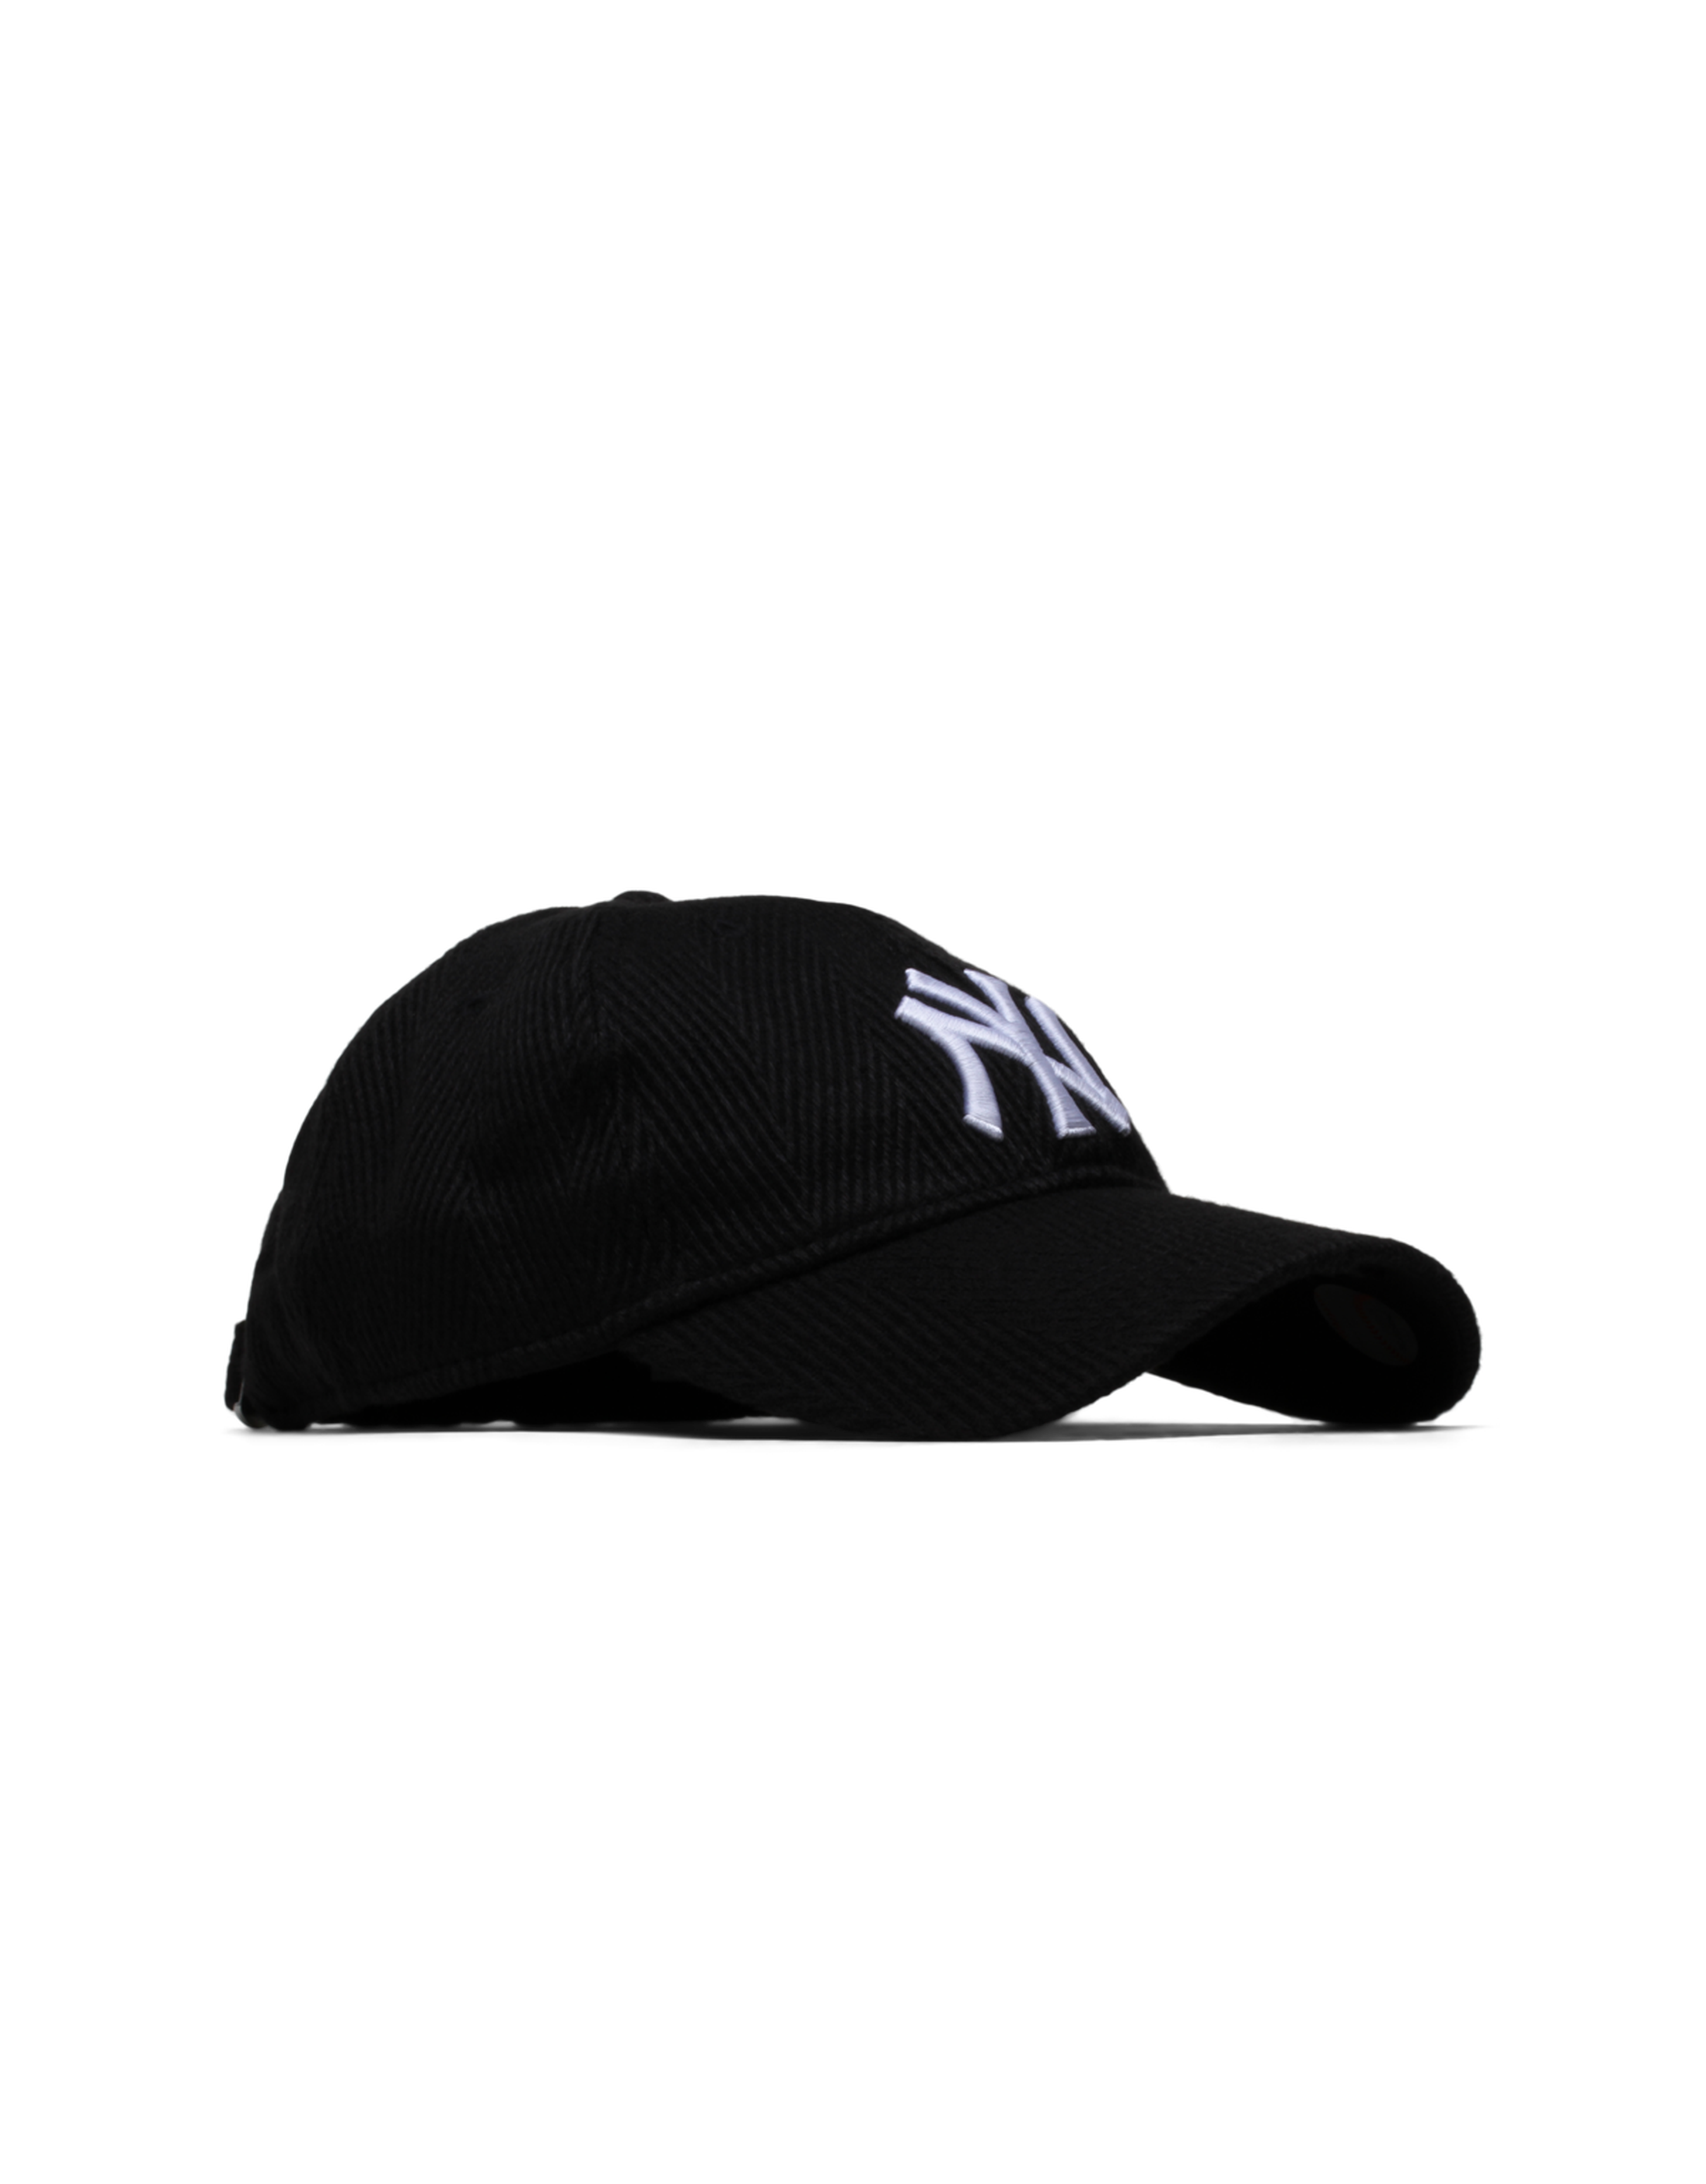 NY Yankees 9TWENTY Adjustable Corduroy Cap